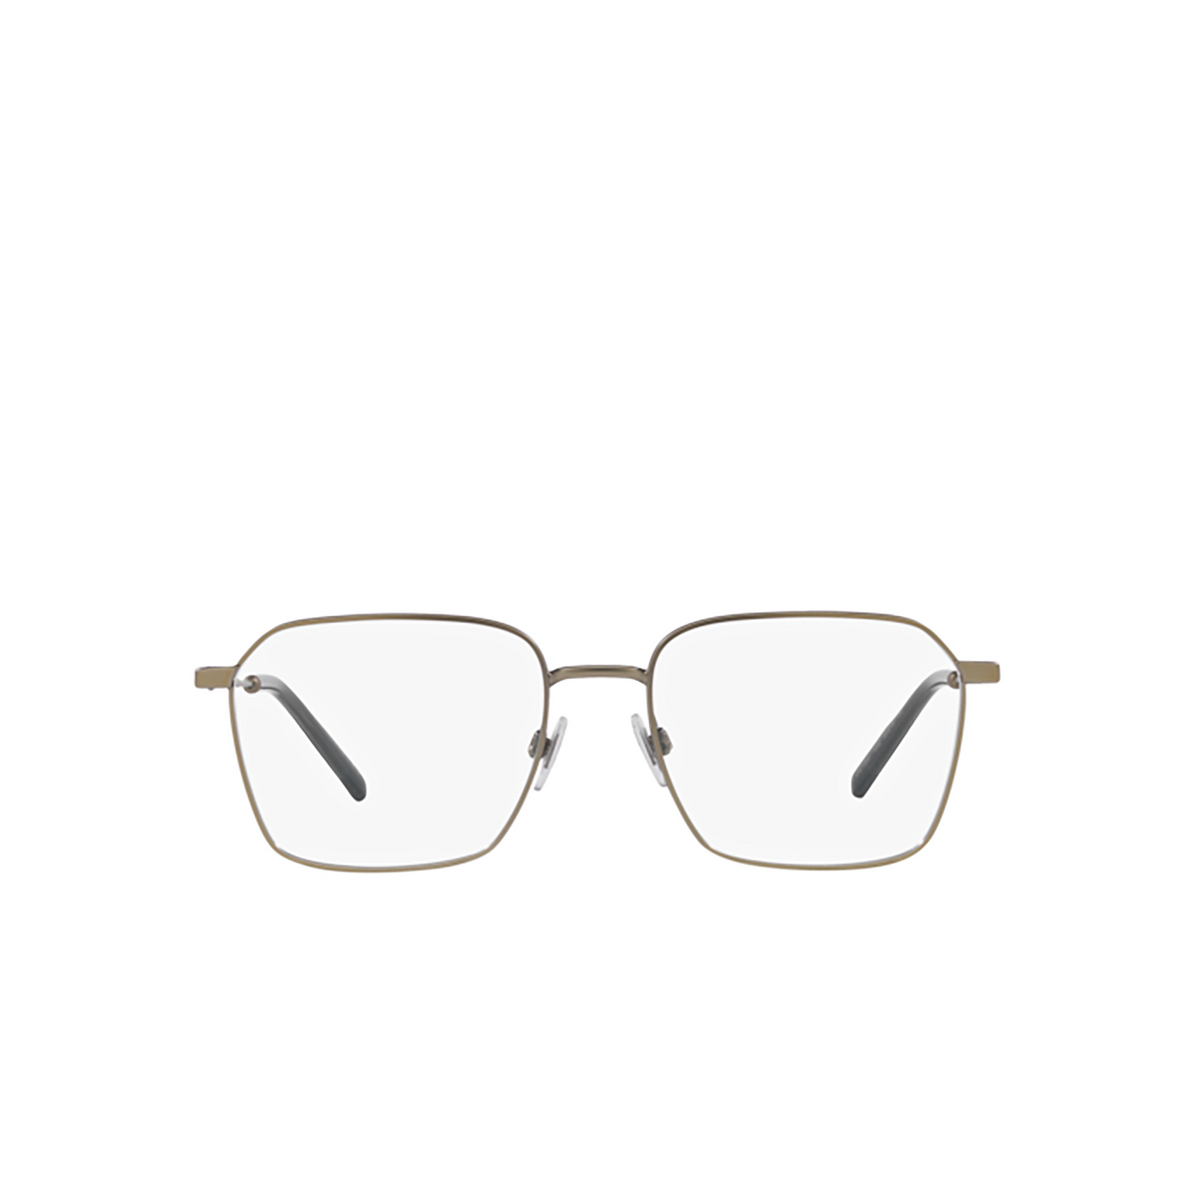 Dolce & Gabbana DG1350 Eyeglasses 1352 Matte bronze - front view